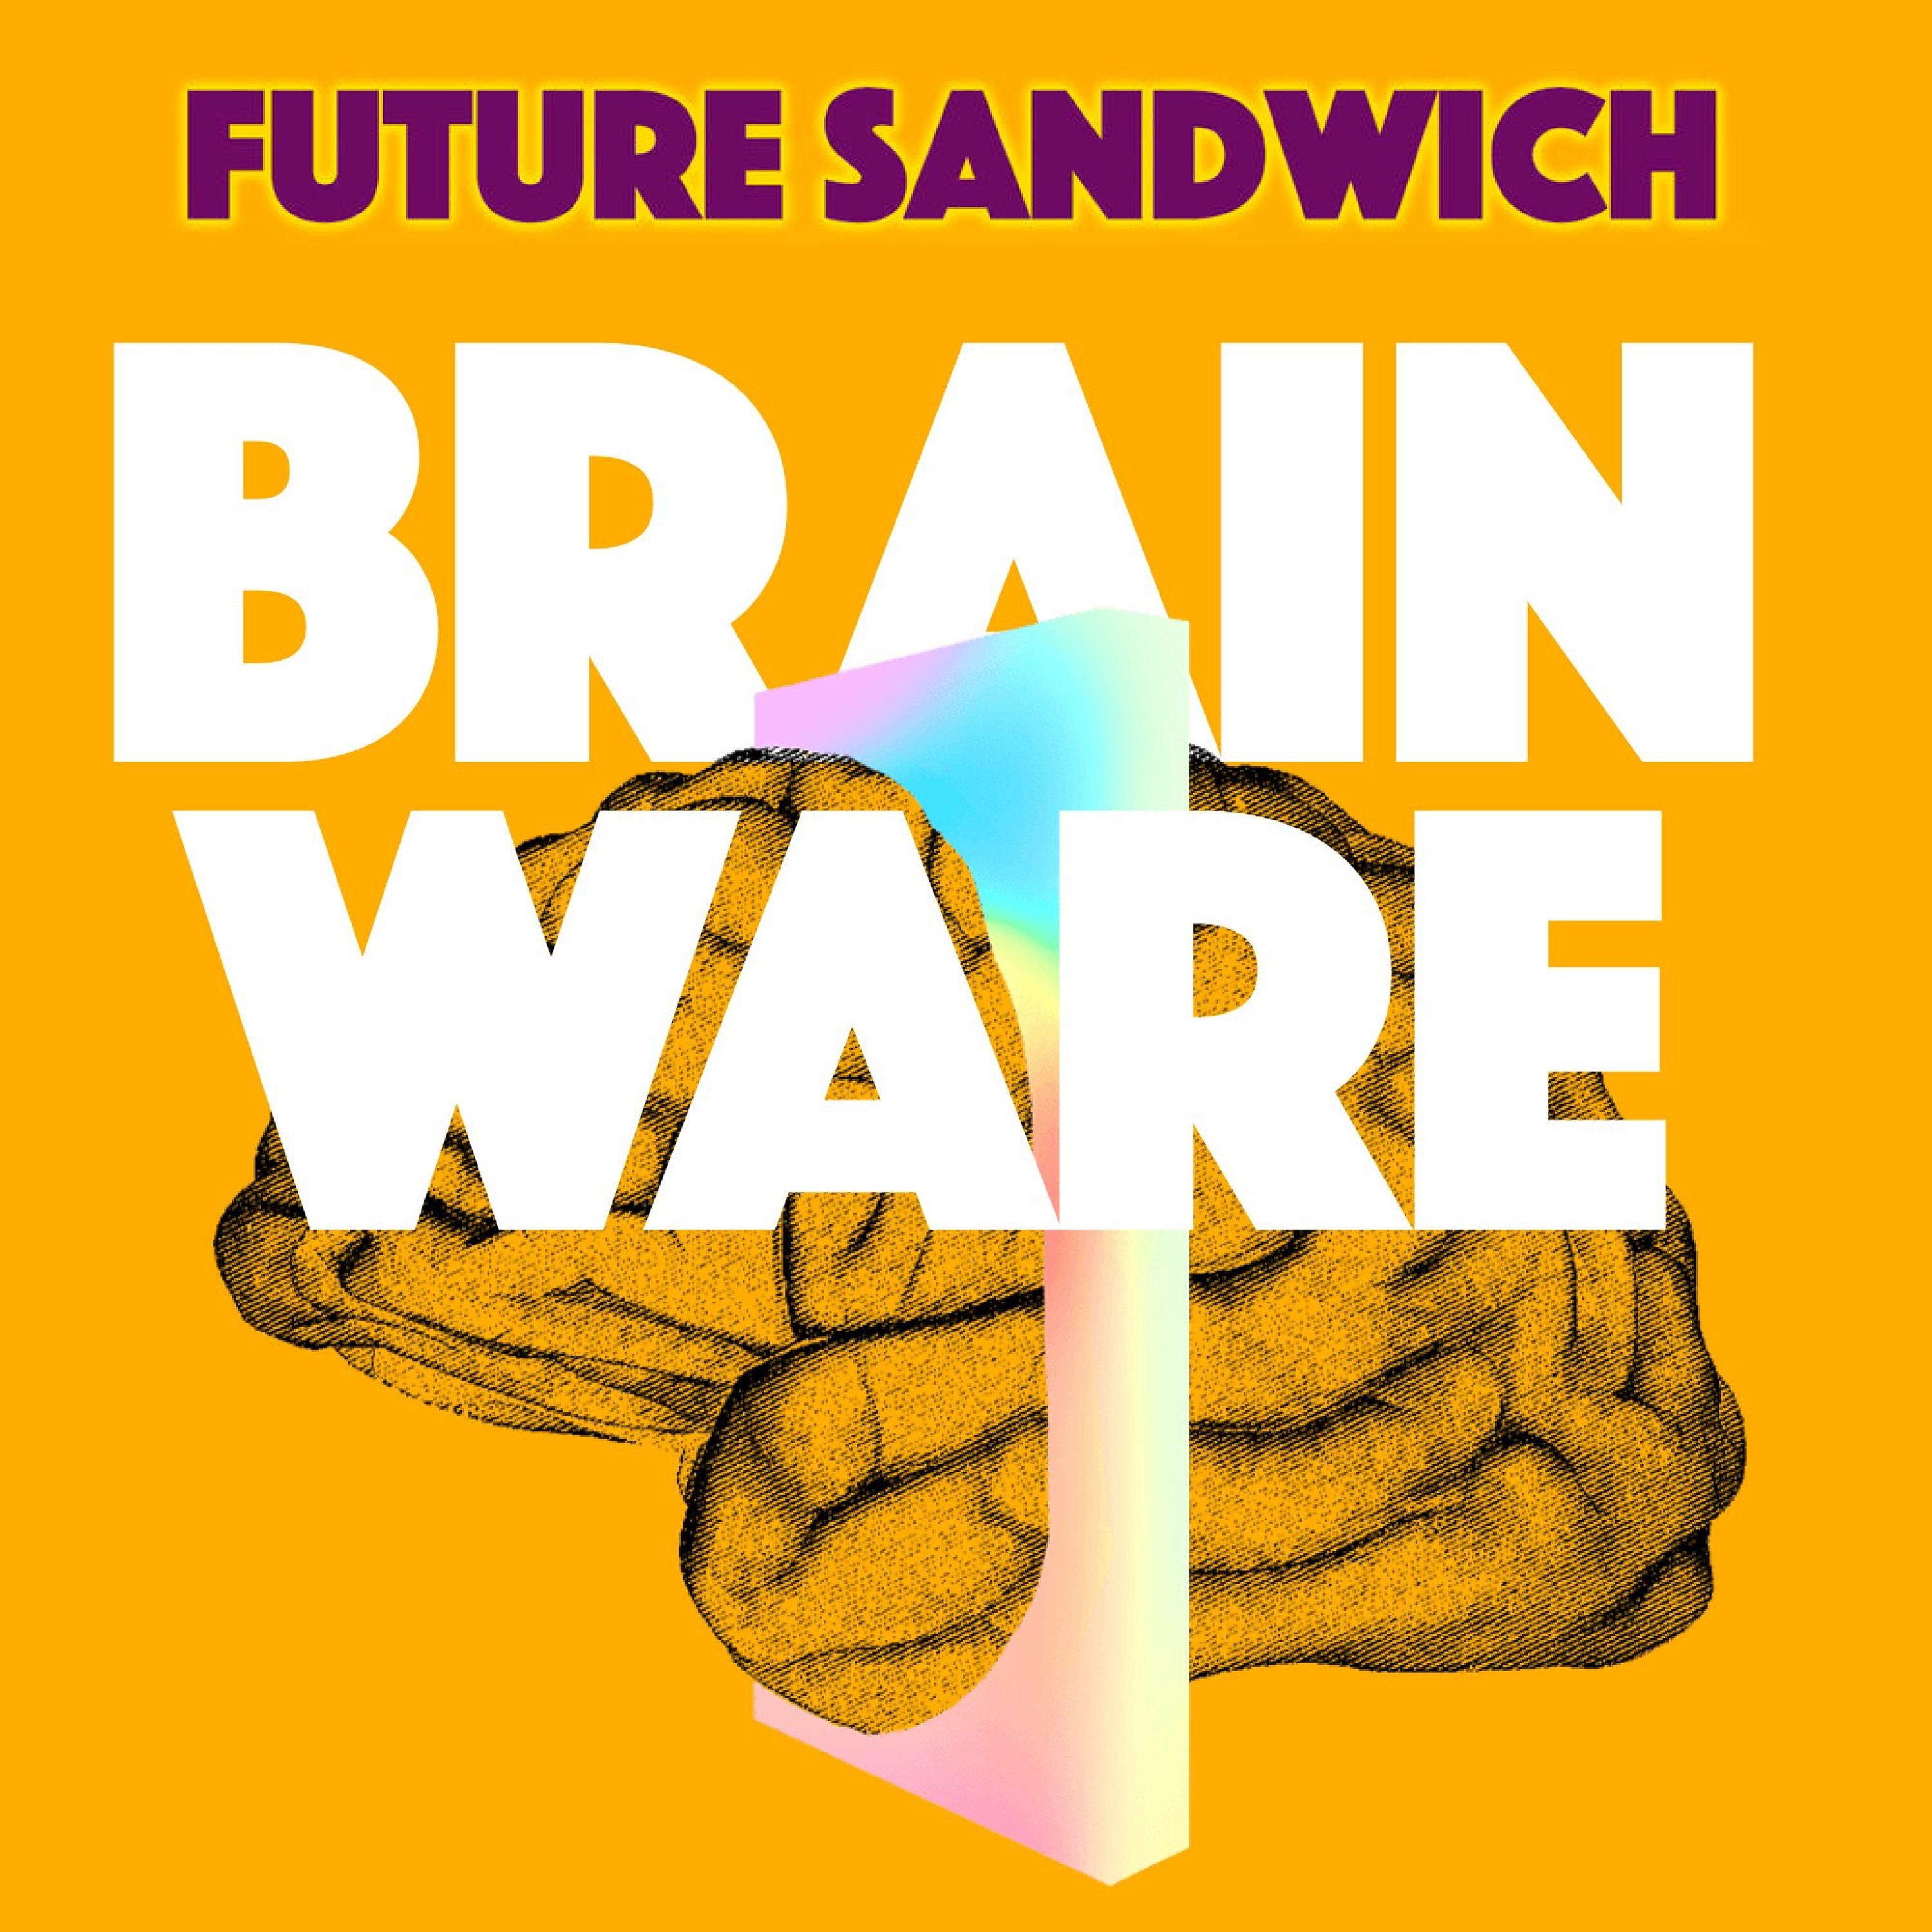 Episode 24: Brainware